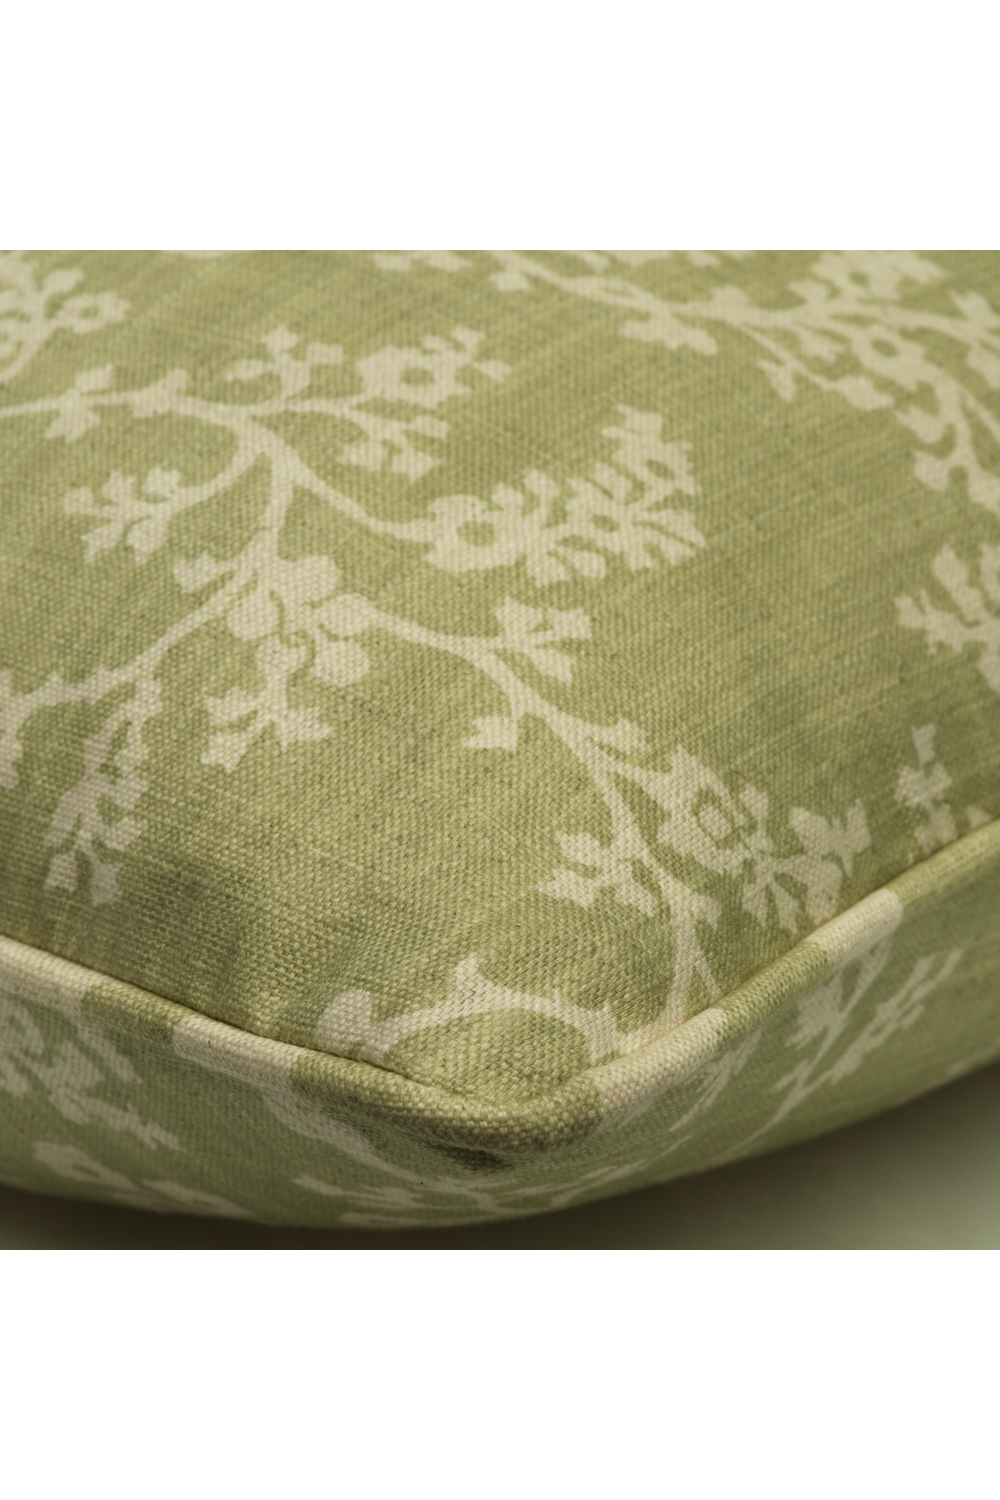 Floral Print Cushion | Andrew Martin Vine | Oroa.com